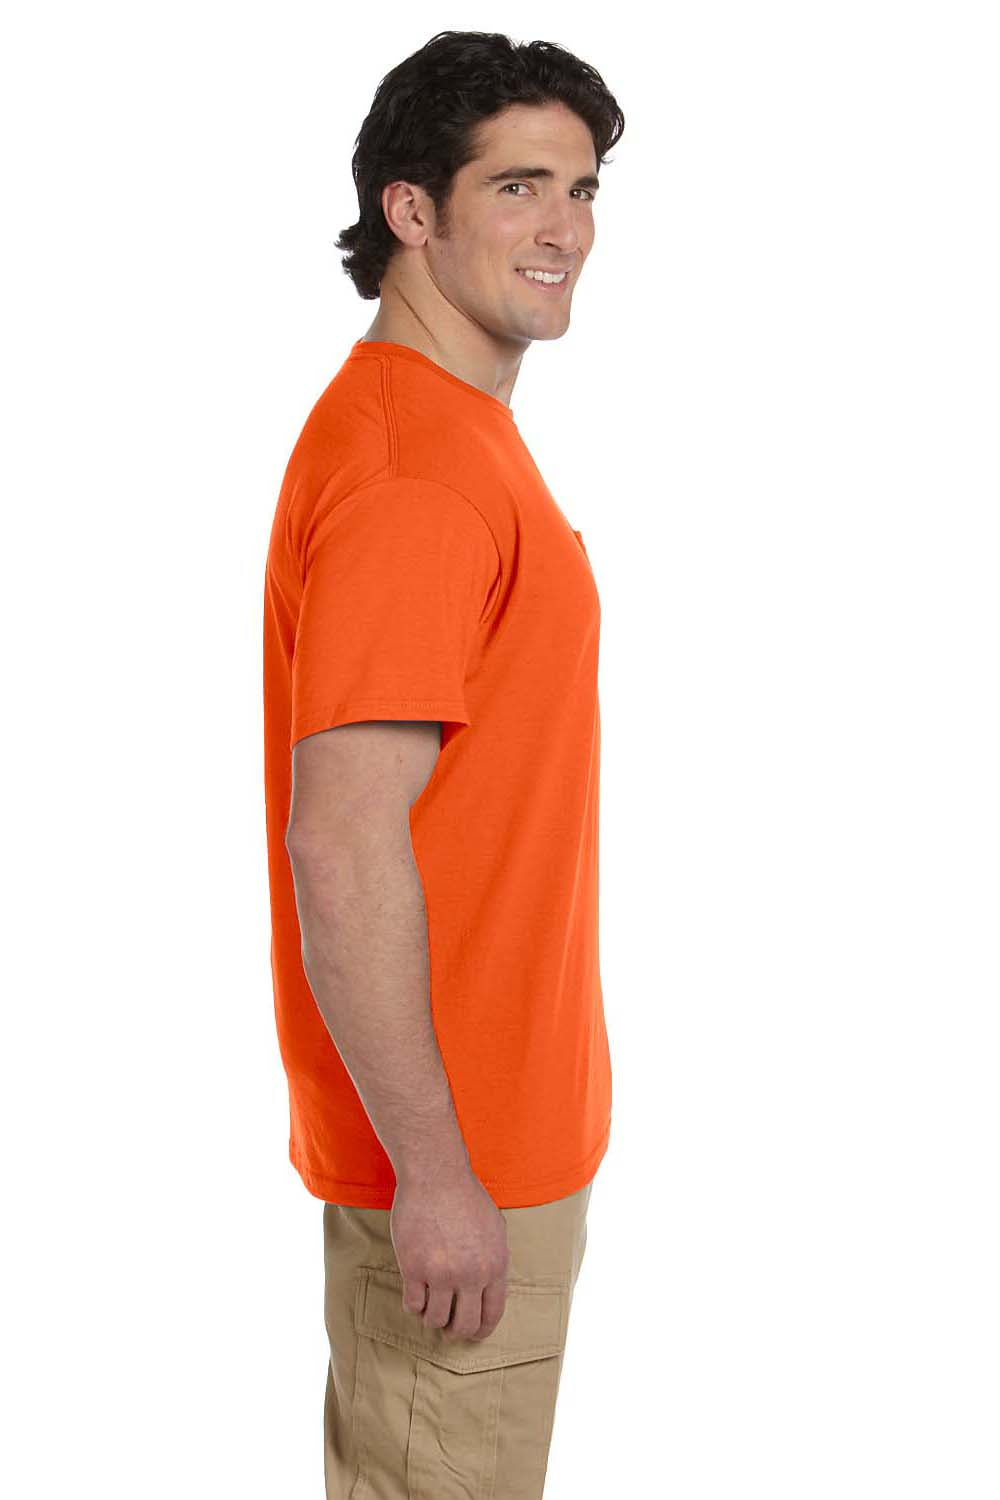 Jerzees 29P Mens Dri-Power Moisture Wicking Short Sleeve Crewneck T-Shirt w/ Pocket Safety Orange Side